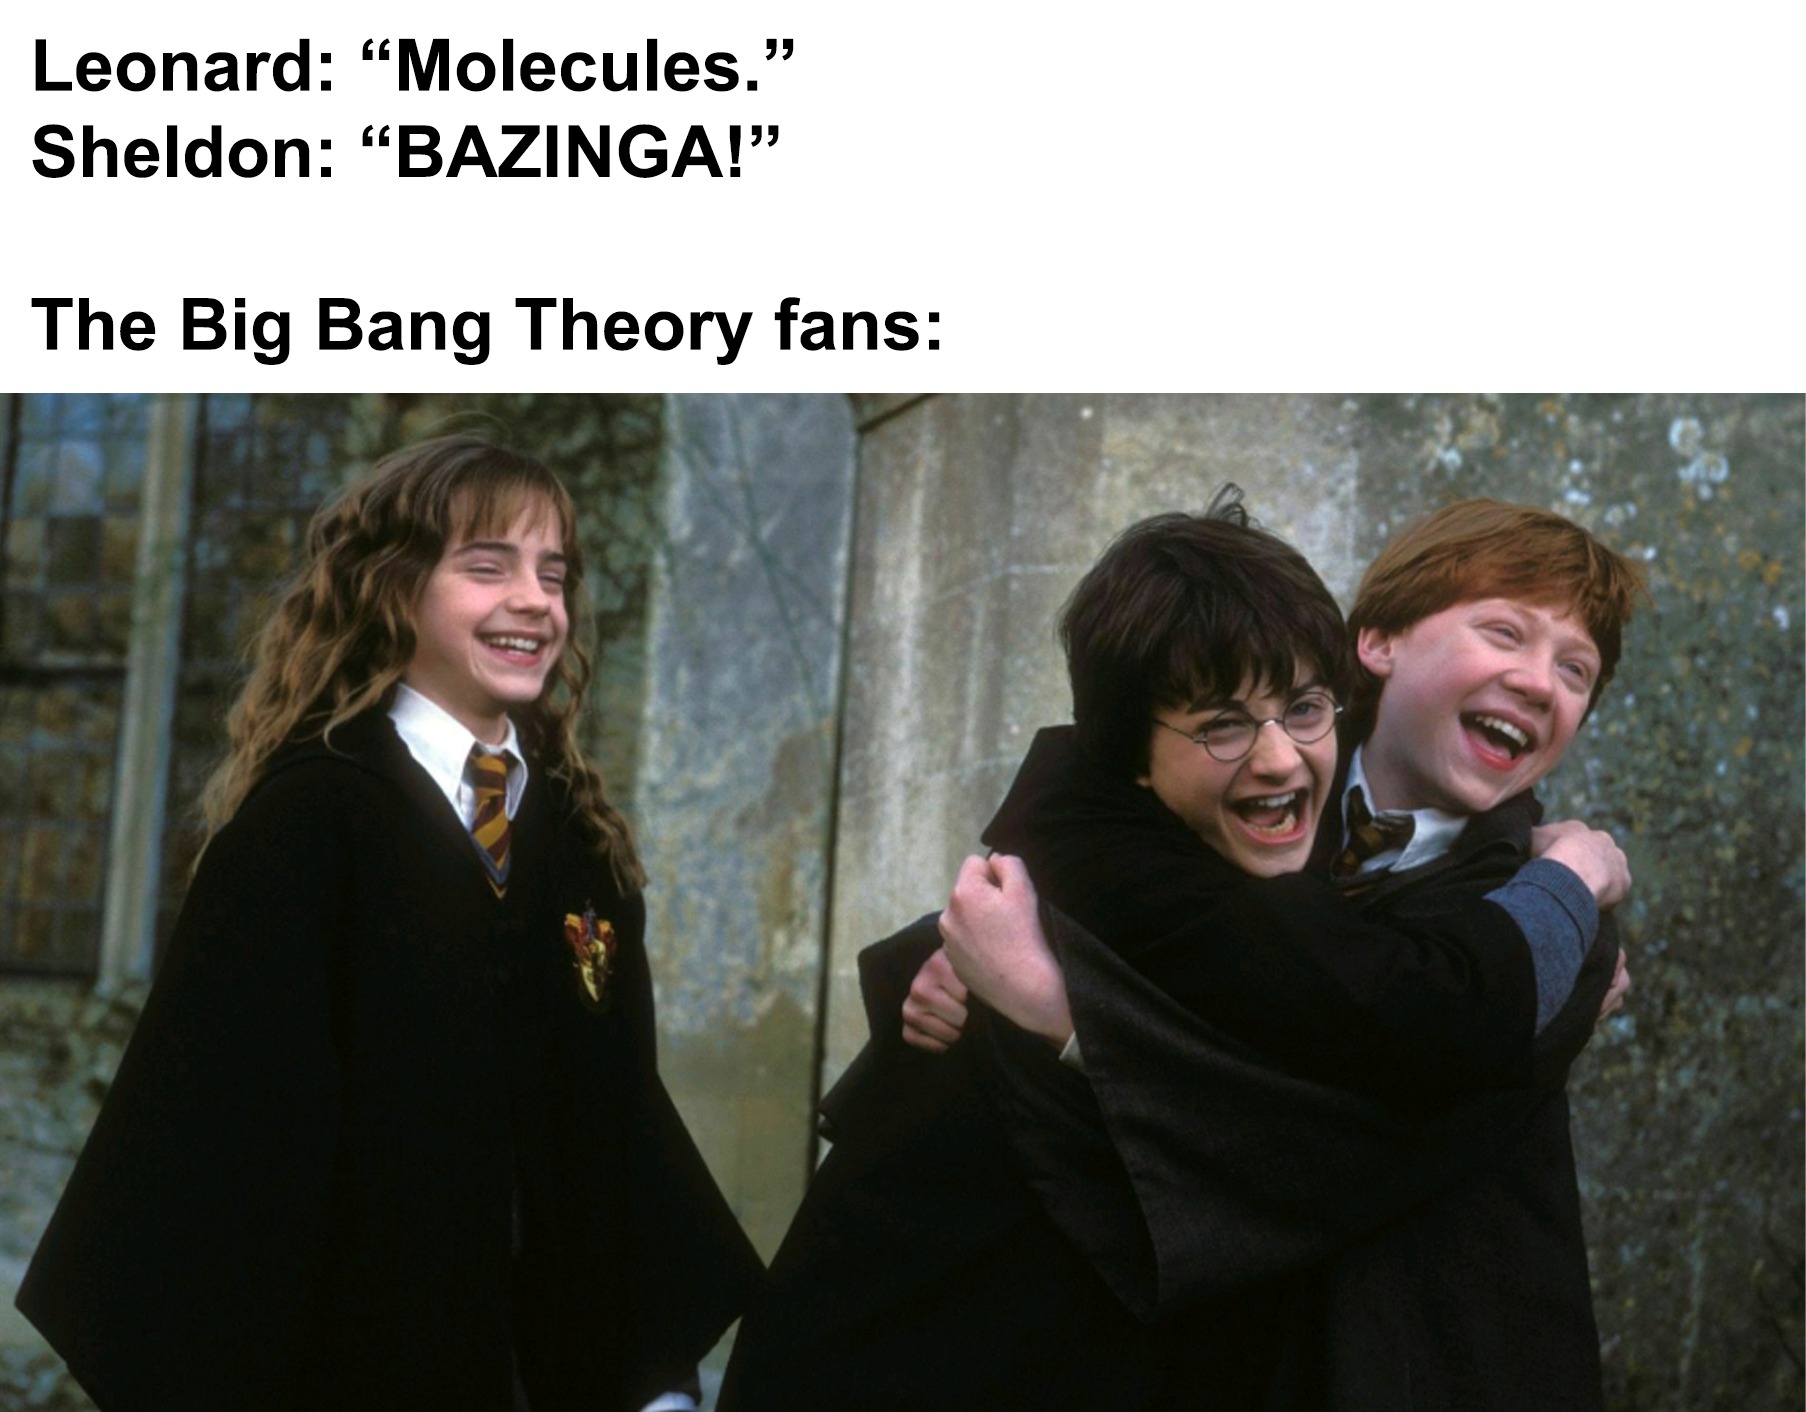 Harry Potter memes - harry potter good - Leonard "Molecules." Sheldon "Bazinga!" The Big Bang Theory fans